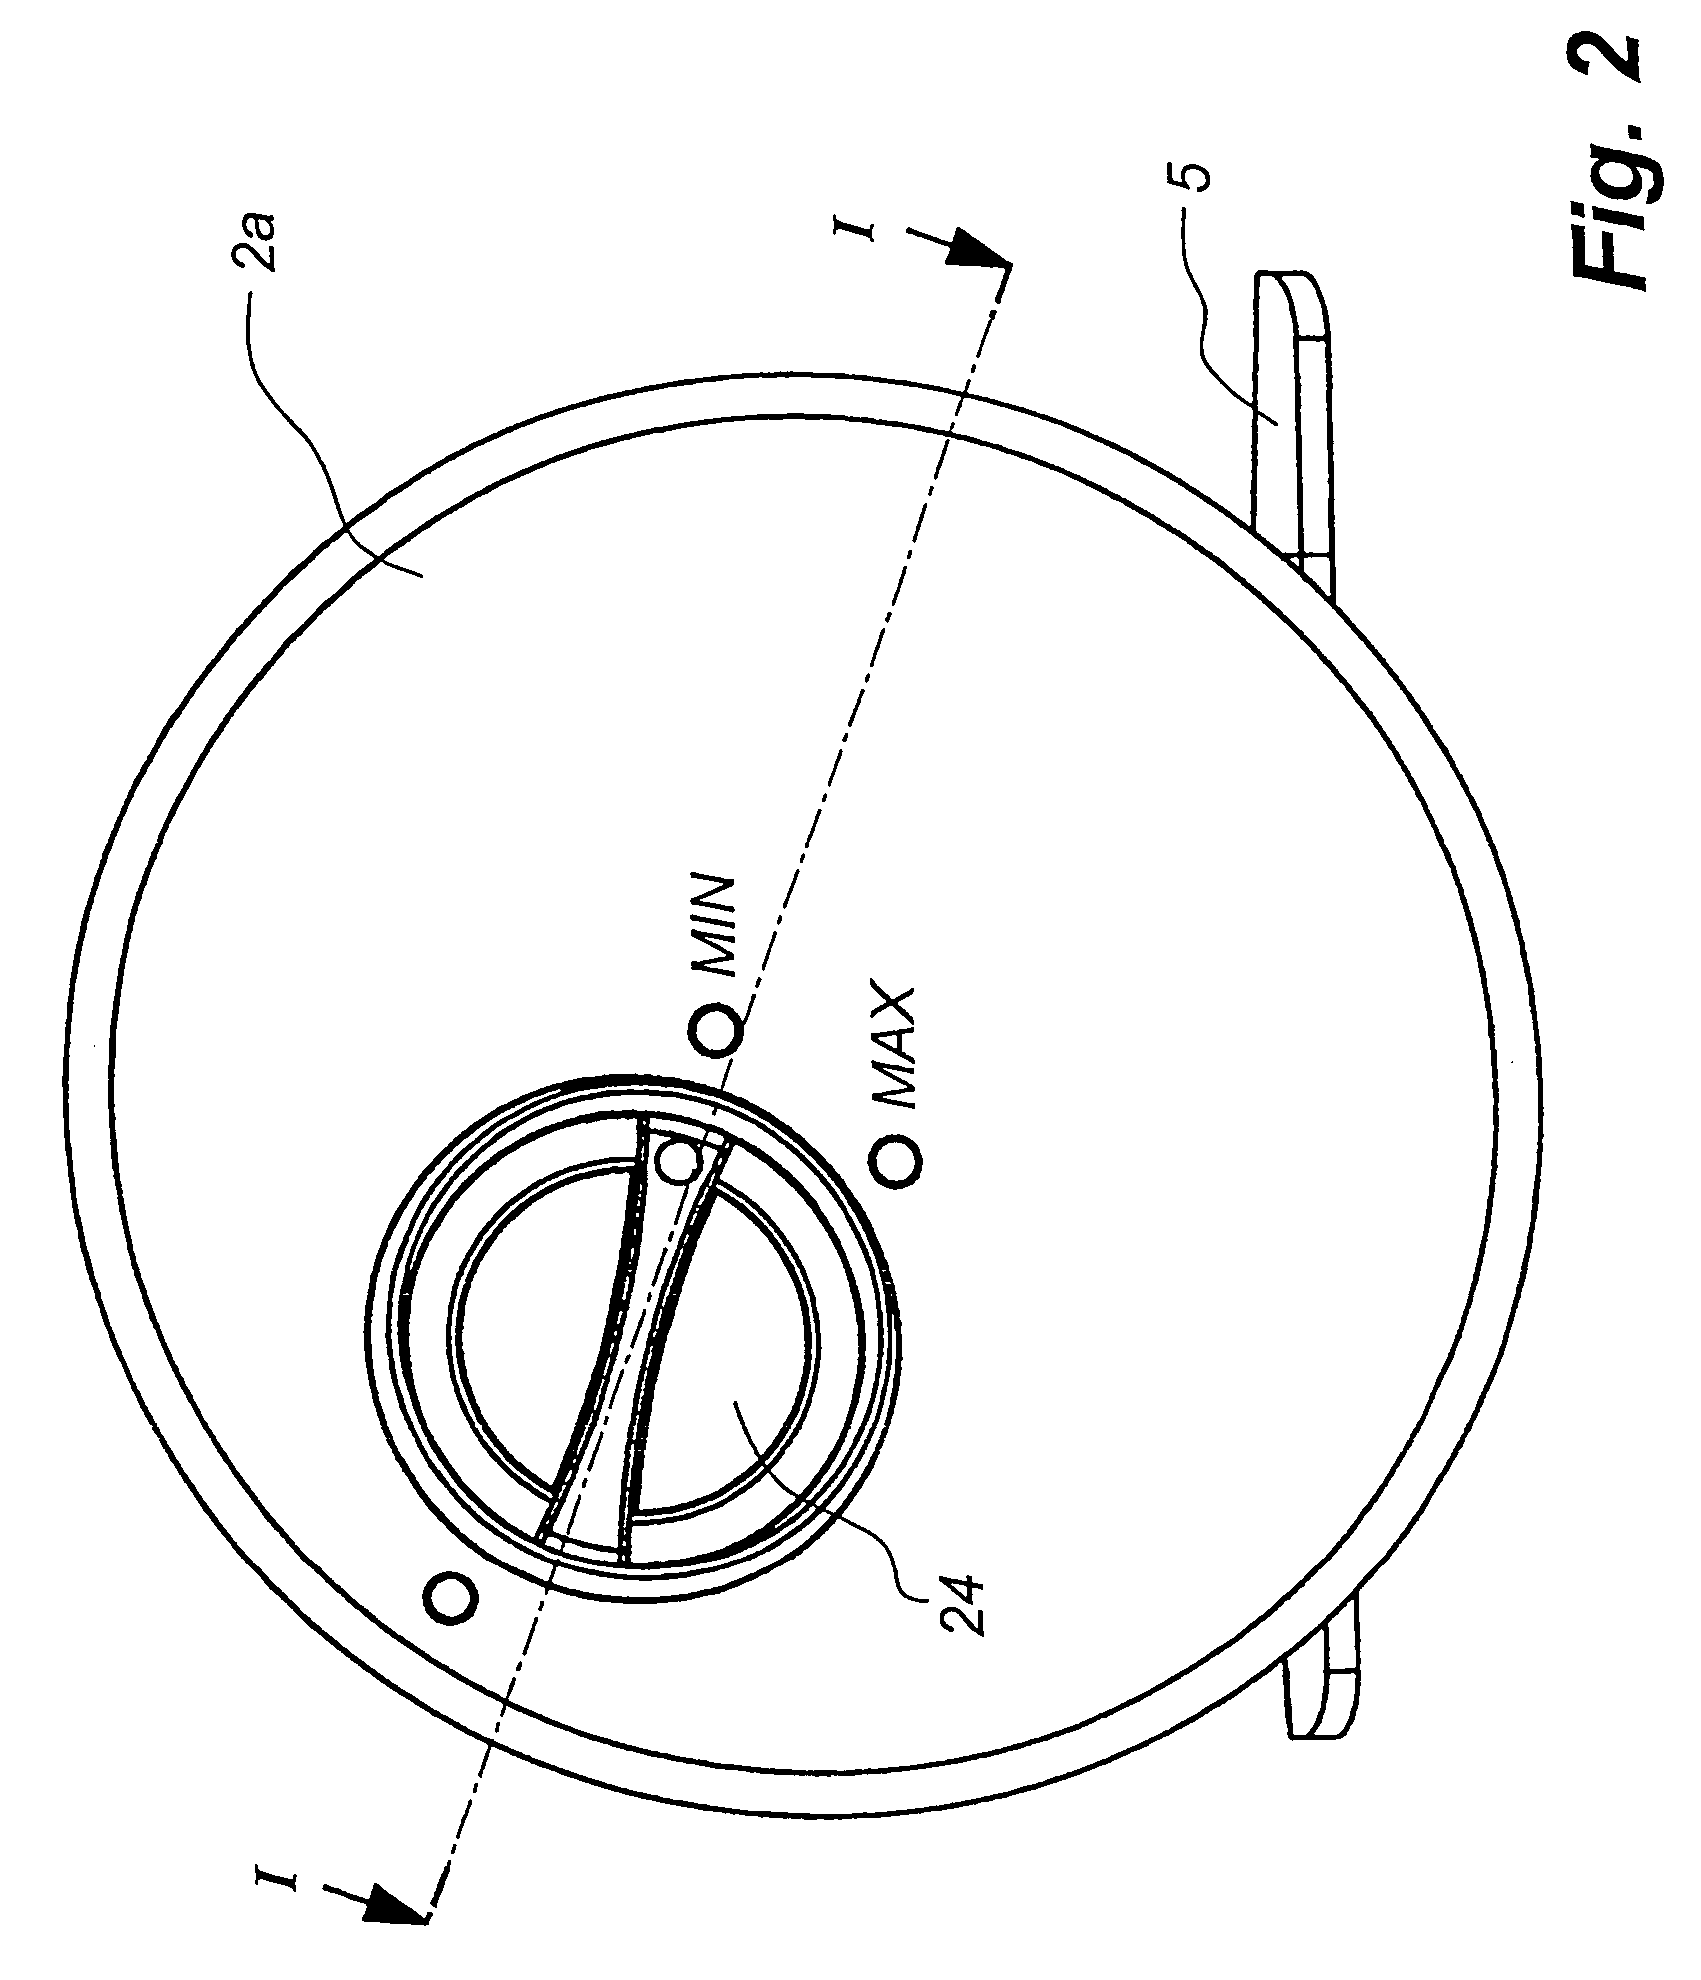 Magnetic brake for braking a line spool of a fishing reel